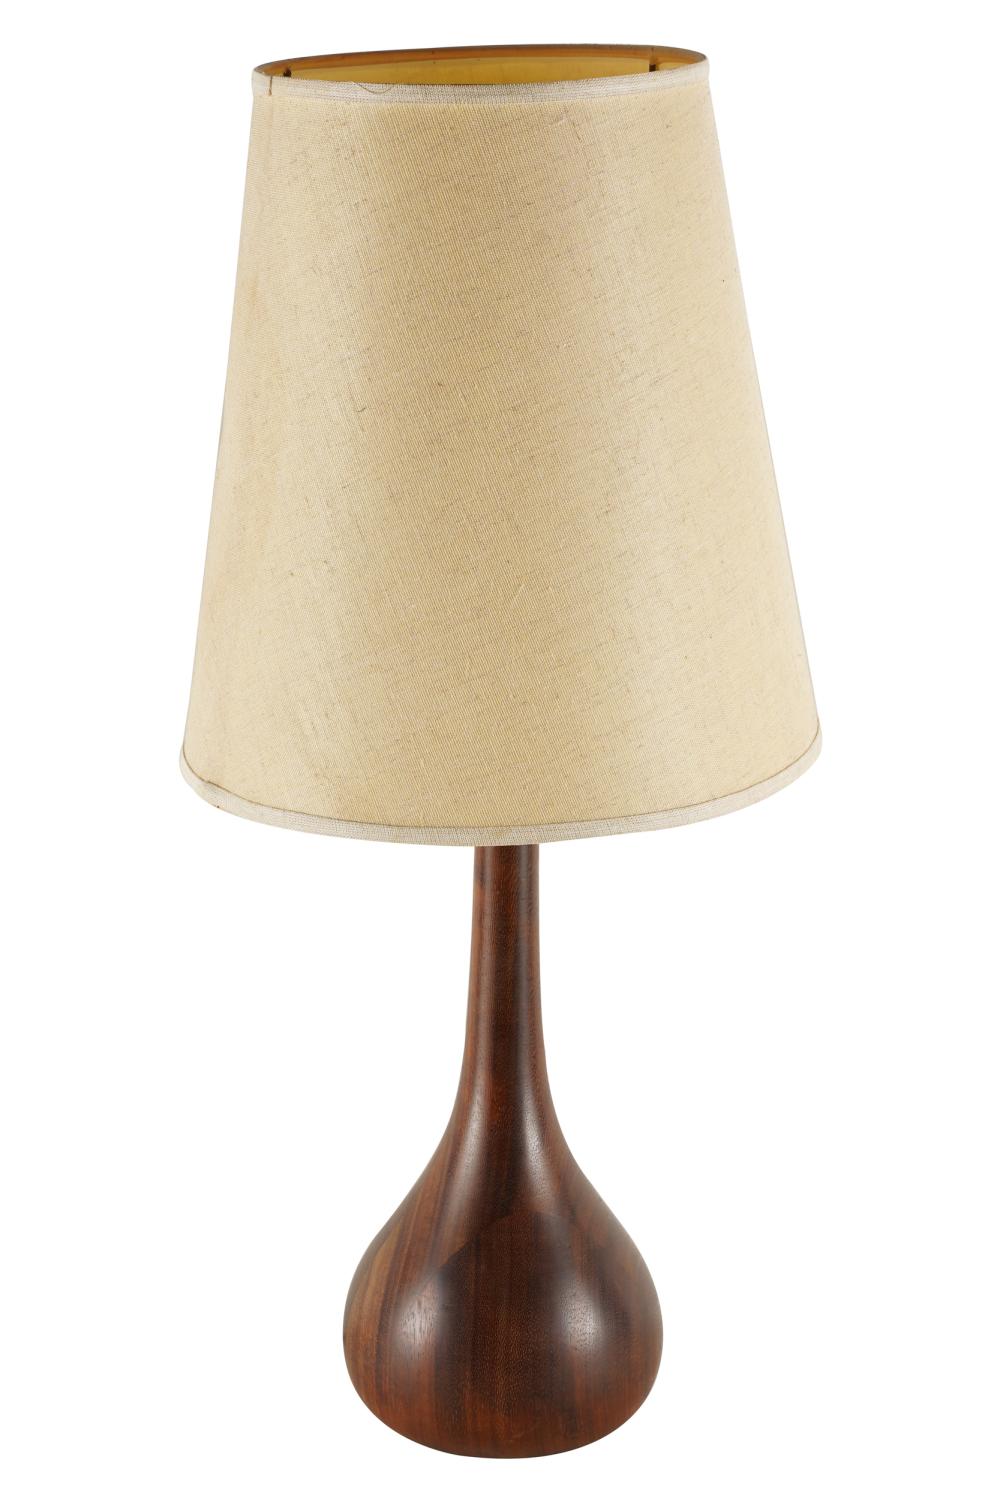 DANISH MODERN WOOD TABLE LAMPunsigned  33387a